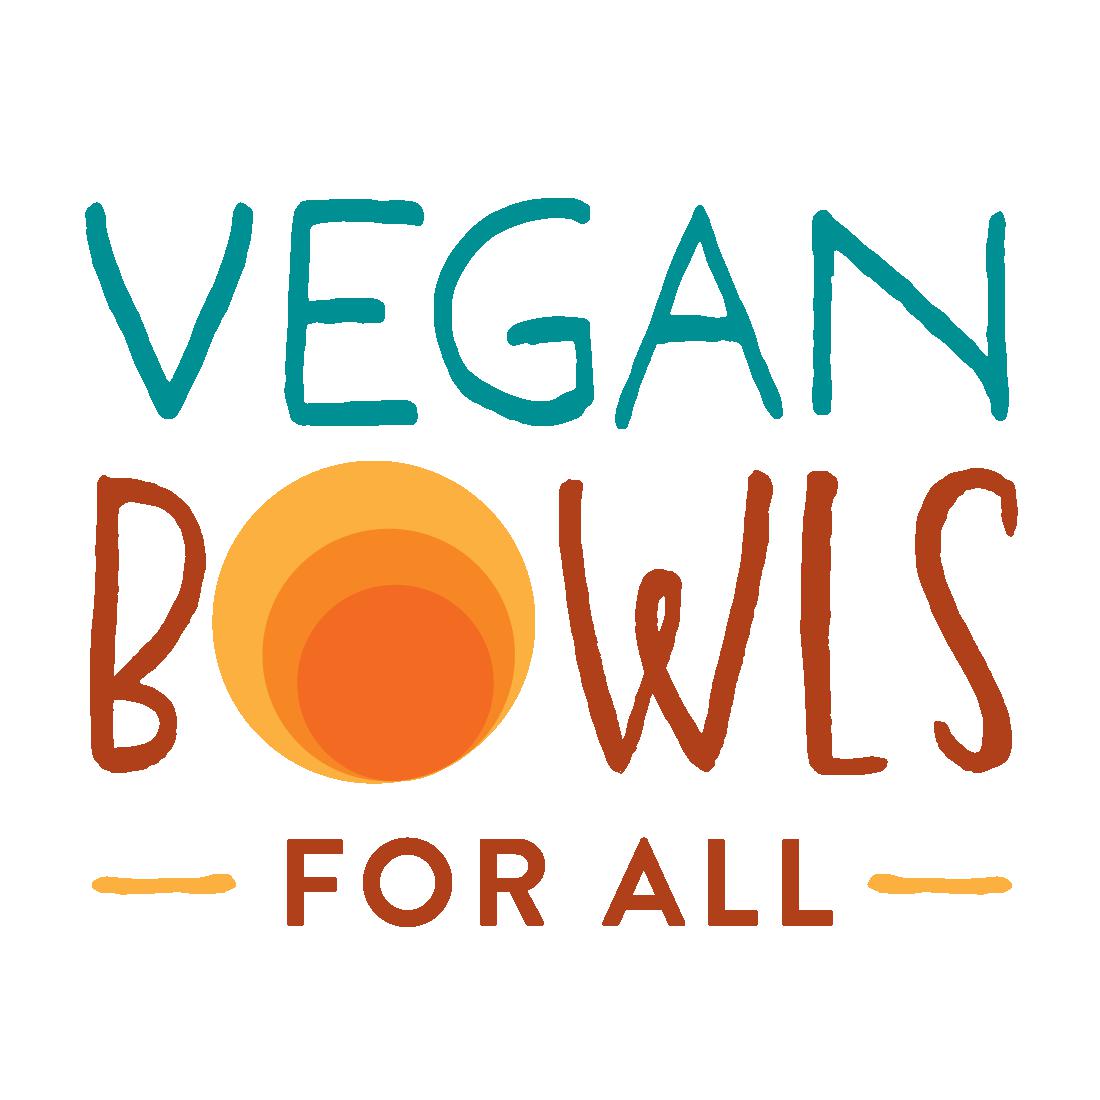 Vegan Bowls For All